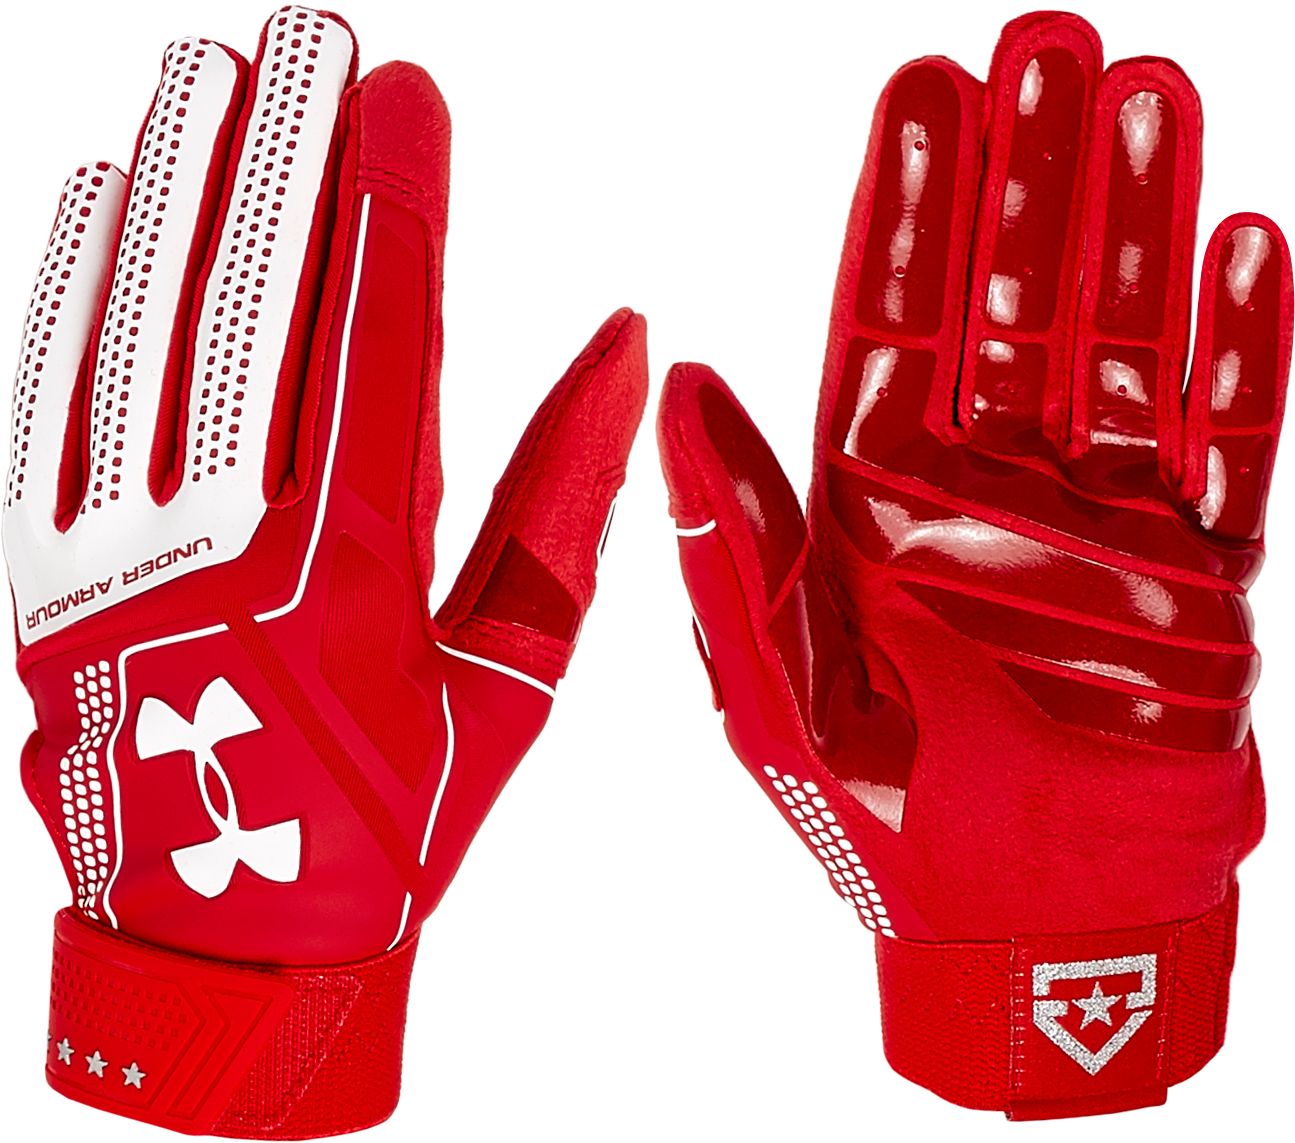 red under armour batting gloves